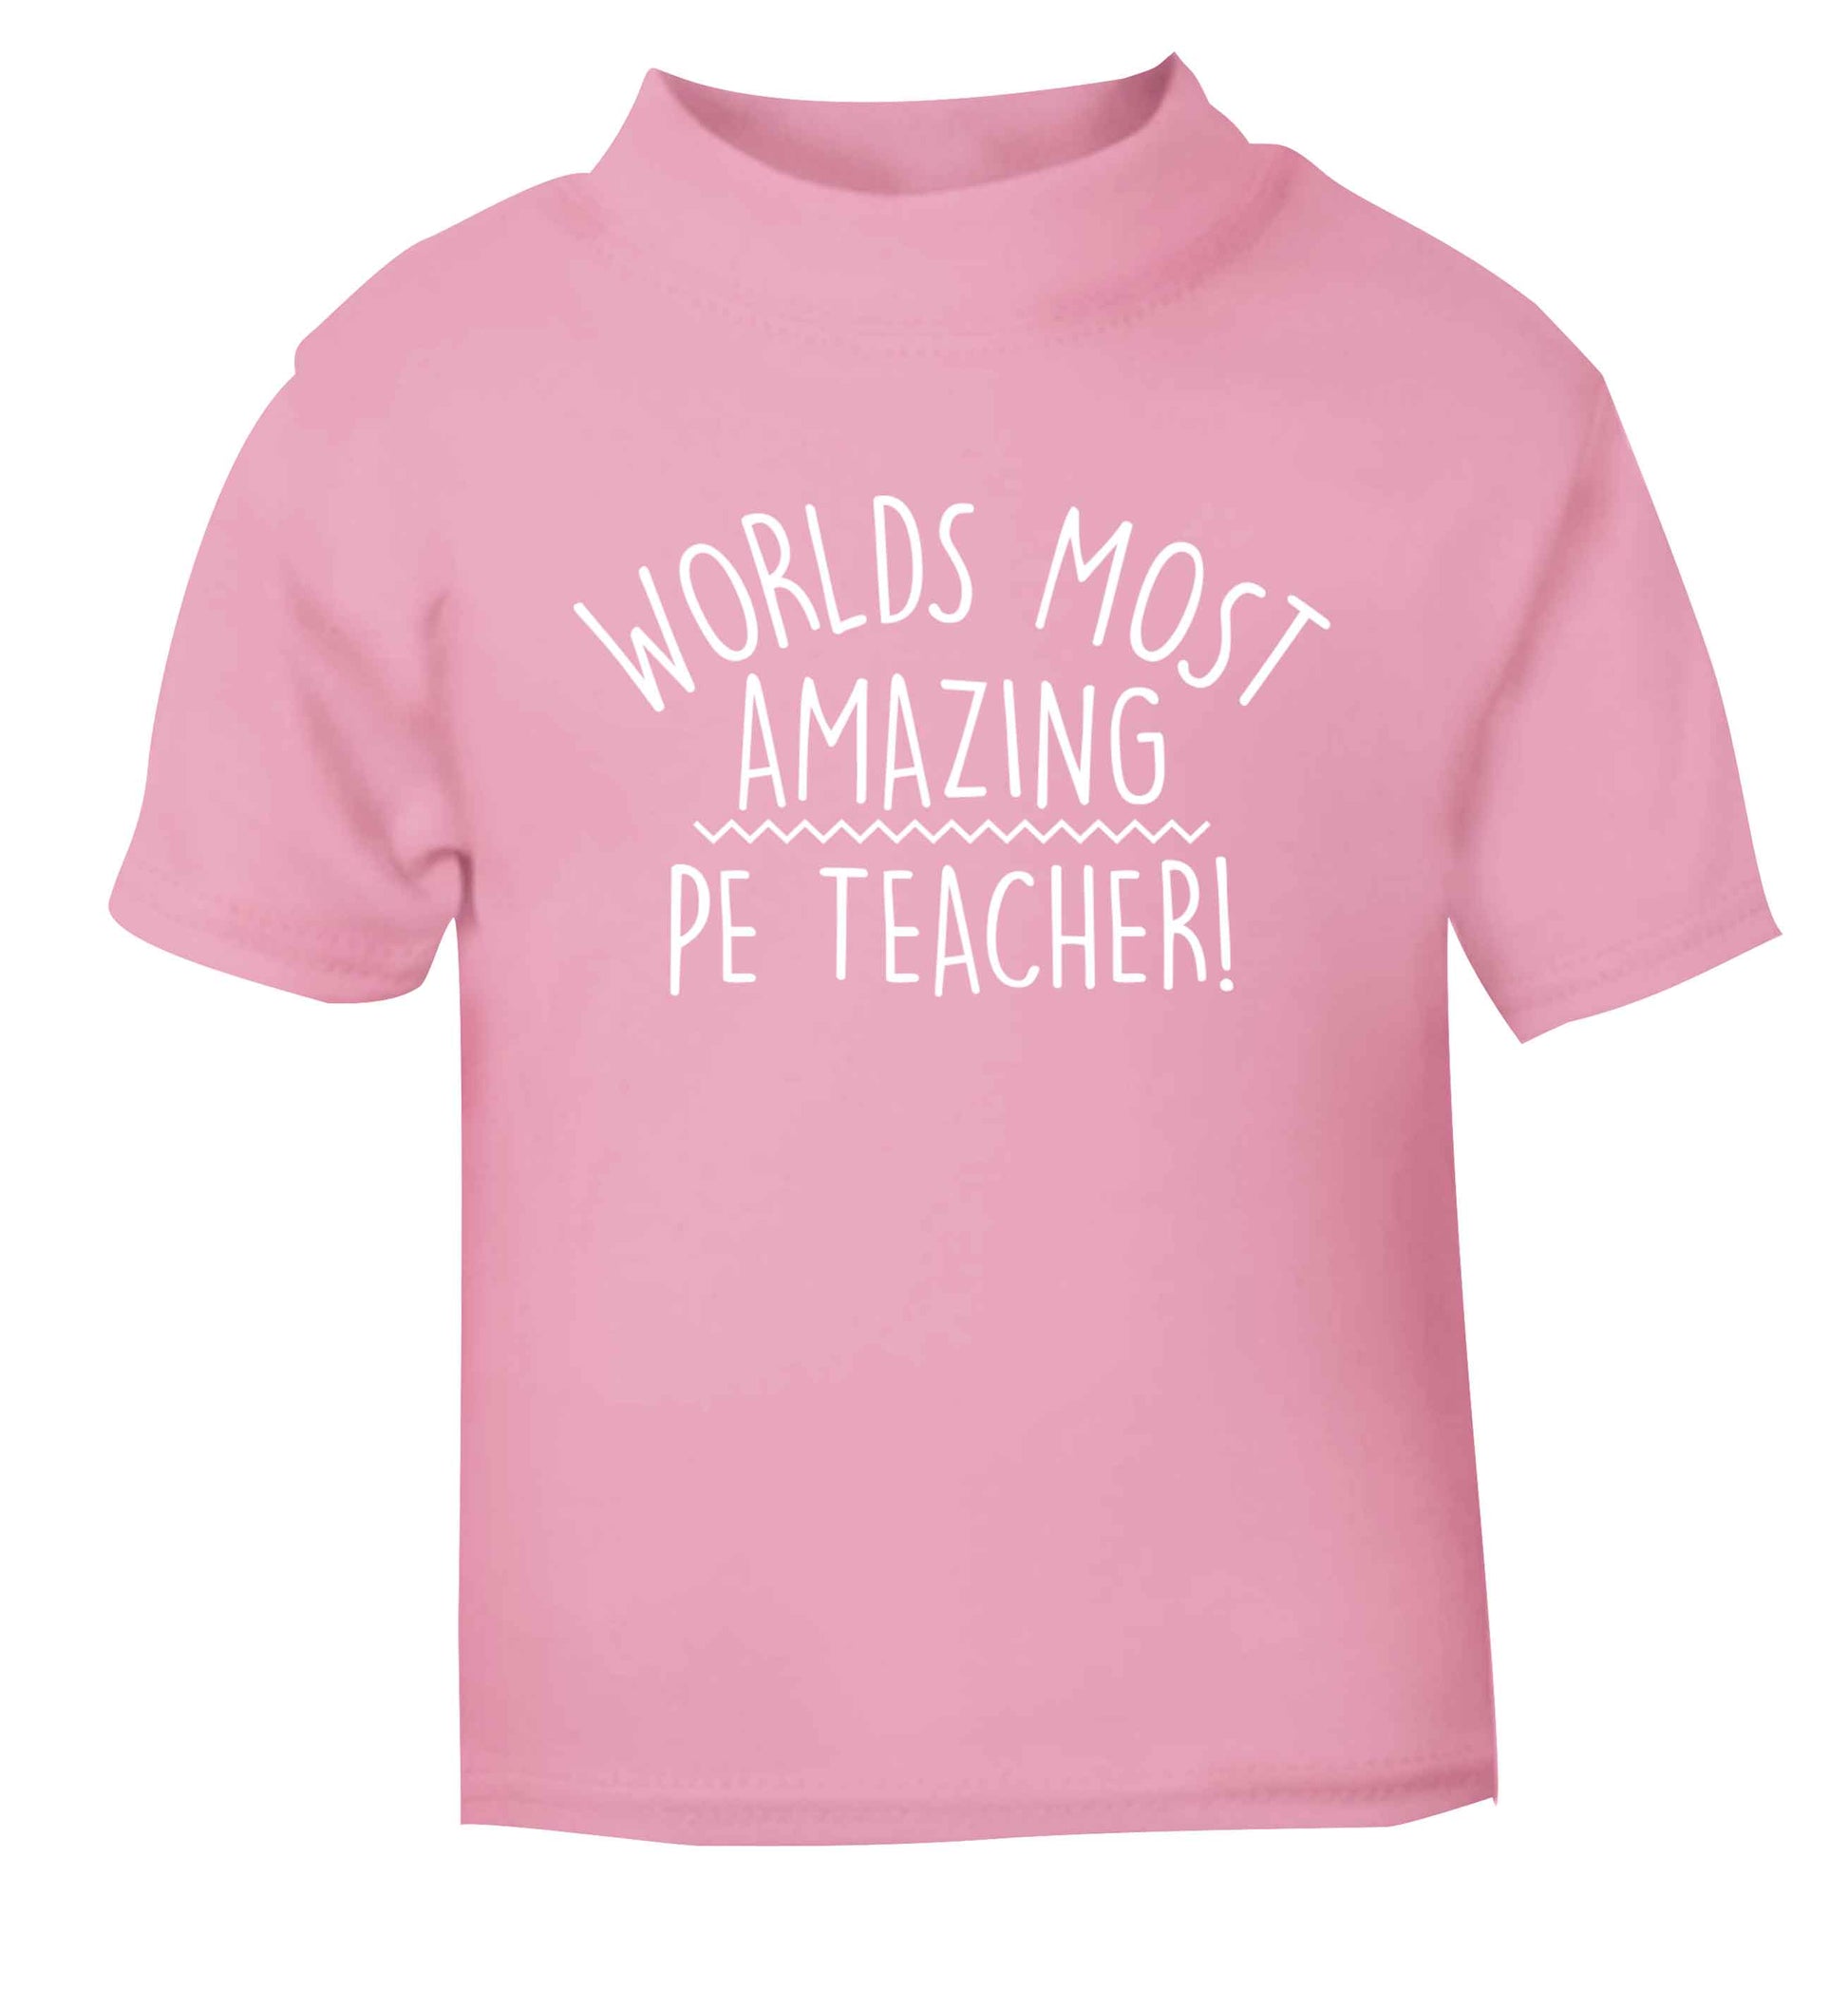 Worlds most amazing PE teacher light pink baby toddler Tshirt 2 Years